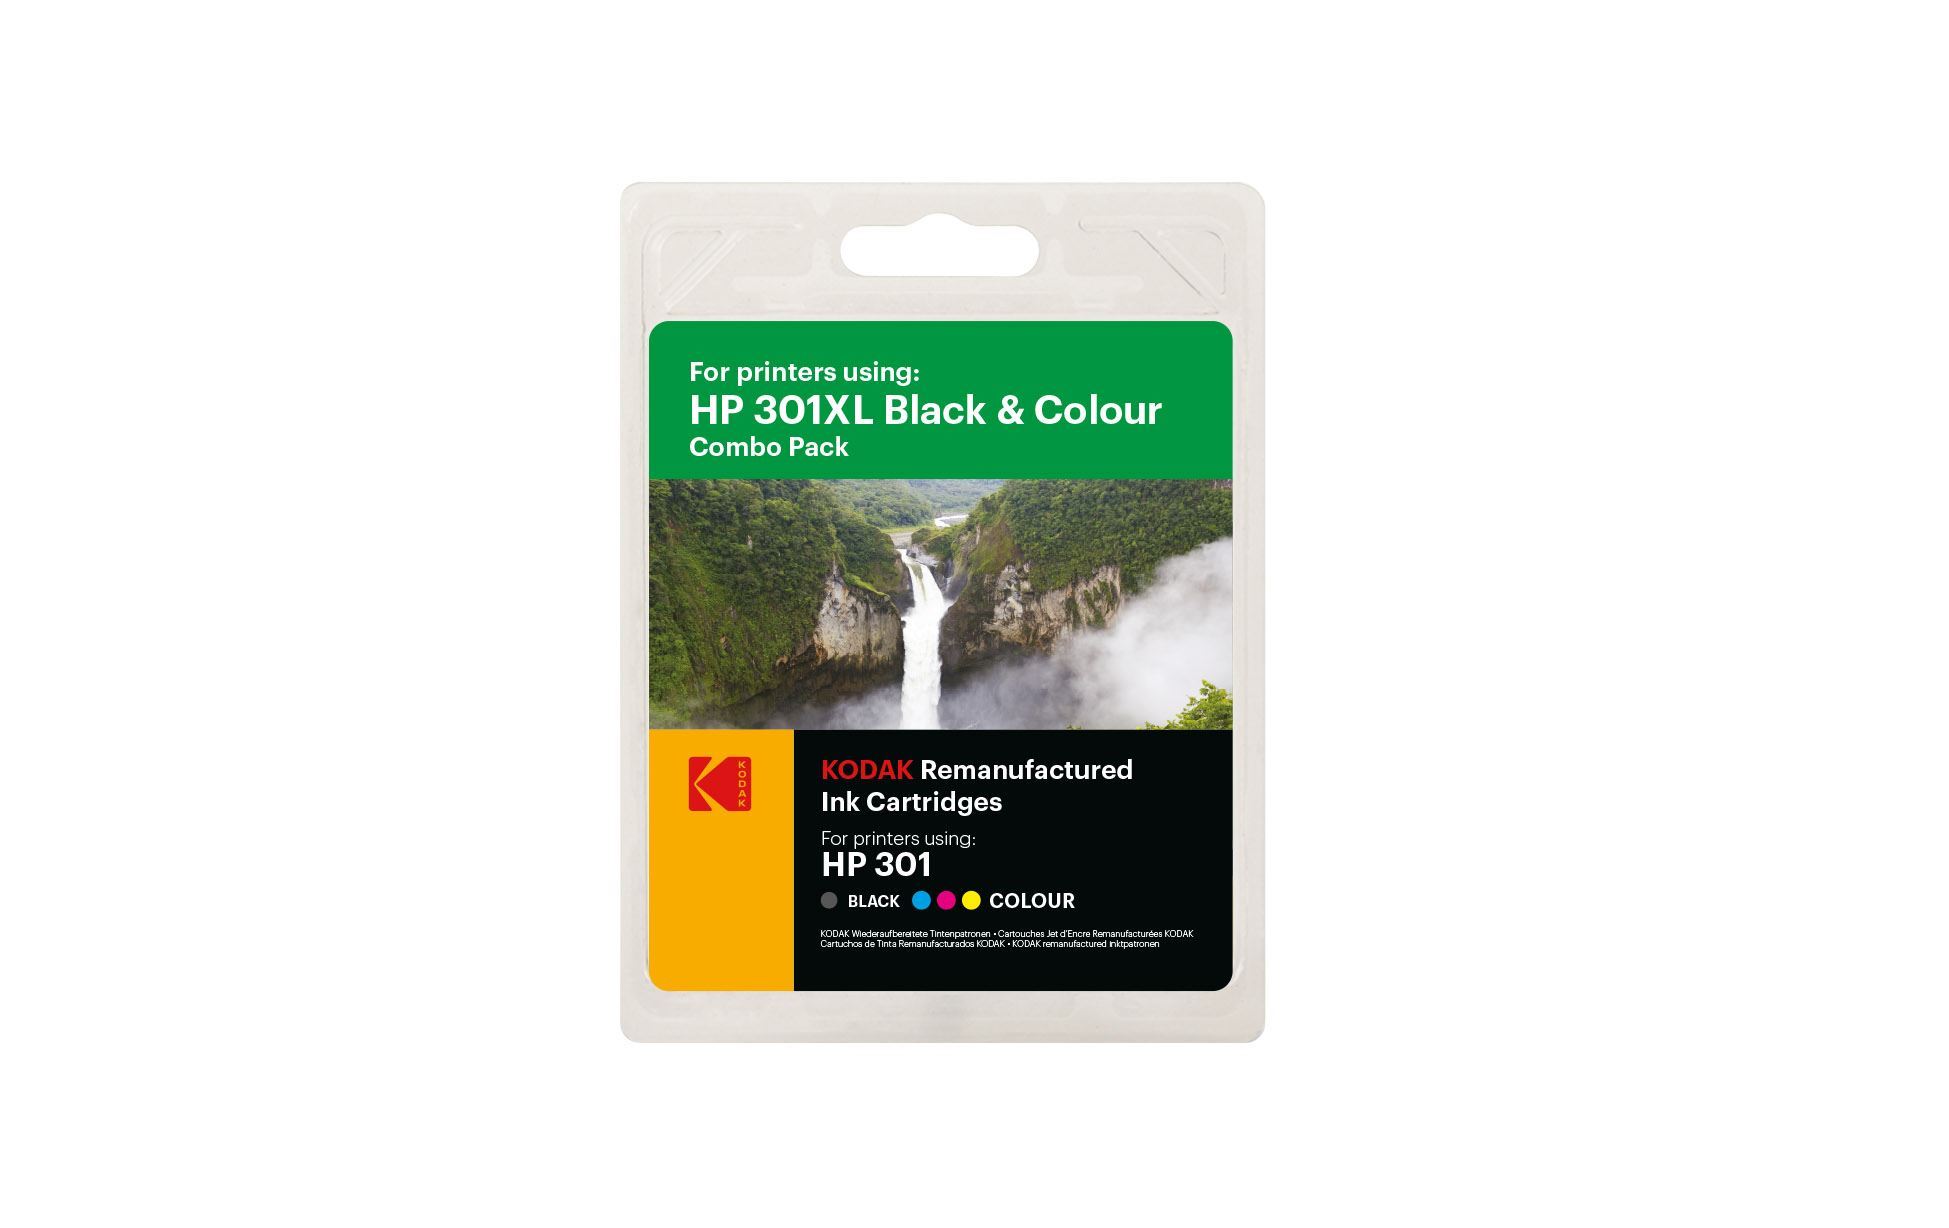 HP 301XL Ink Kodak Cartridges Black | Replacement Red & Colour Bus Cartridges